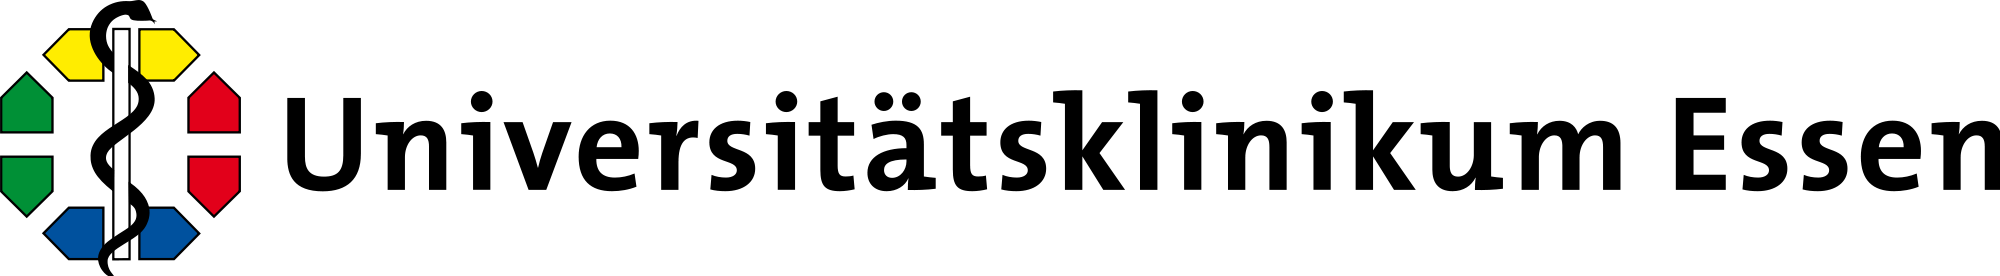 2000px-uniklinikum-essen-logo.png